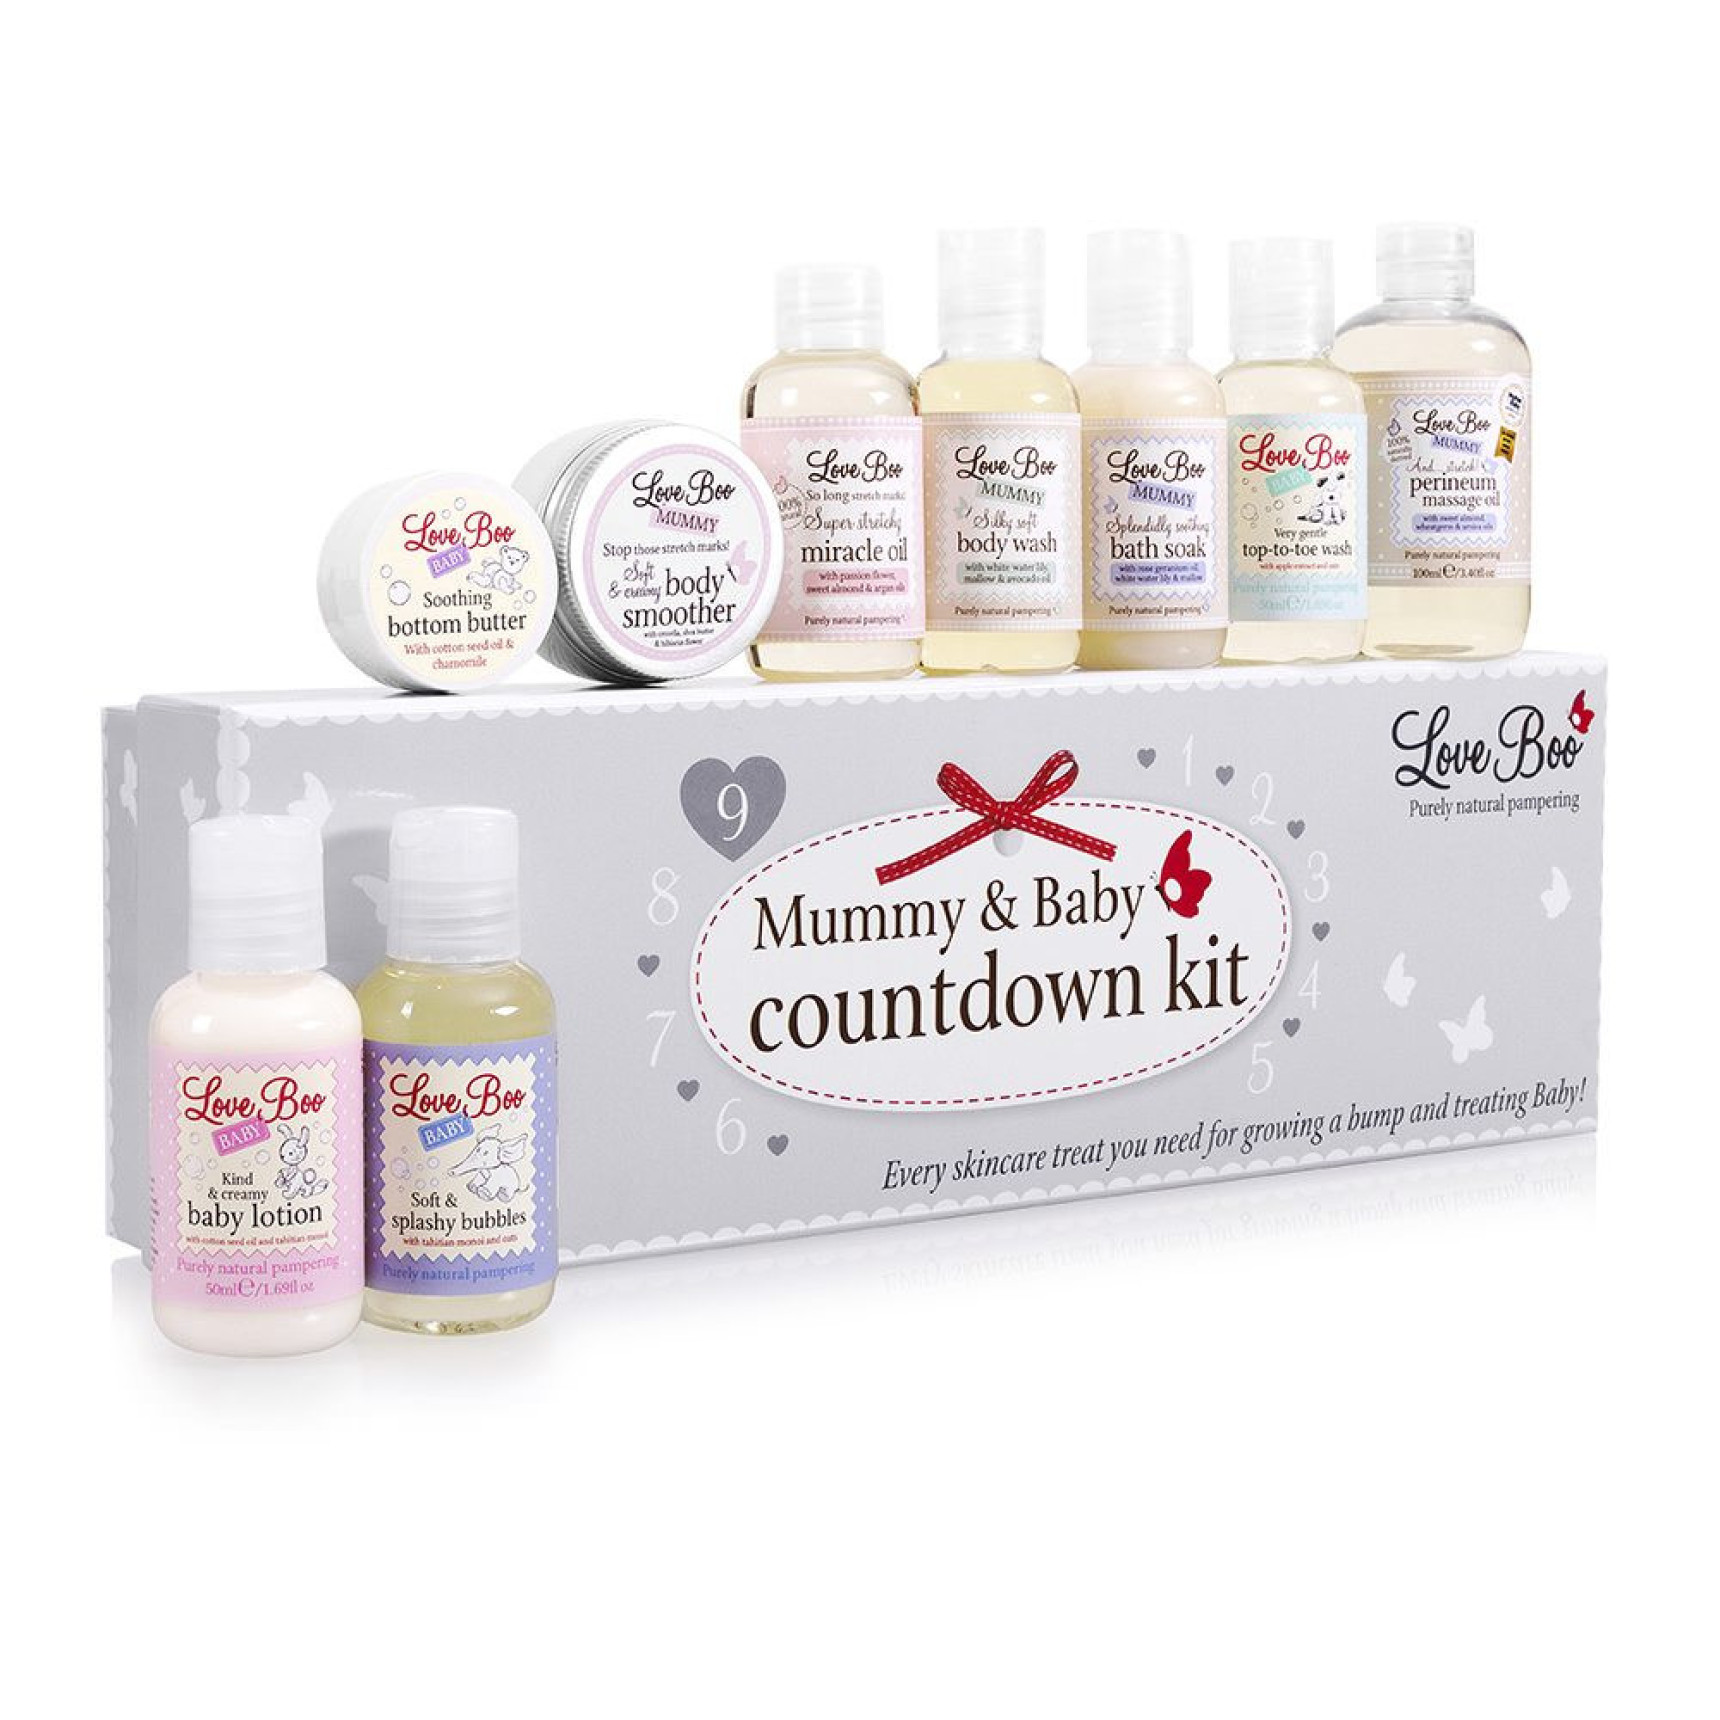 love-boo-mummy-and-baby-countdown-kit